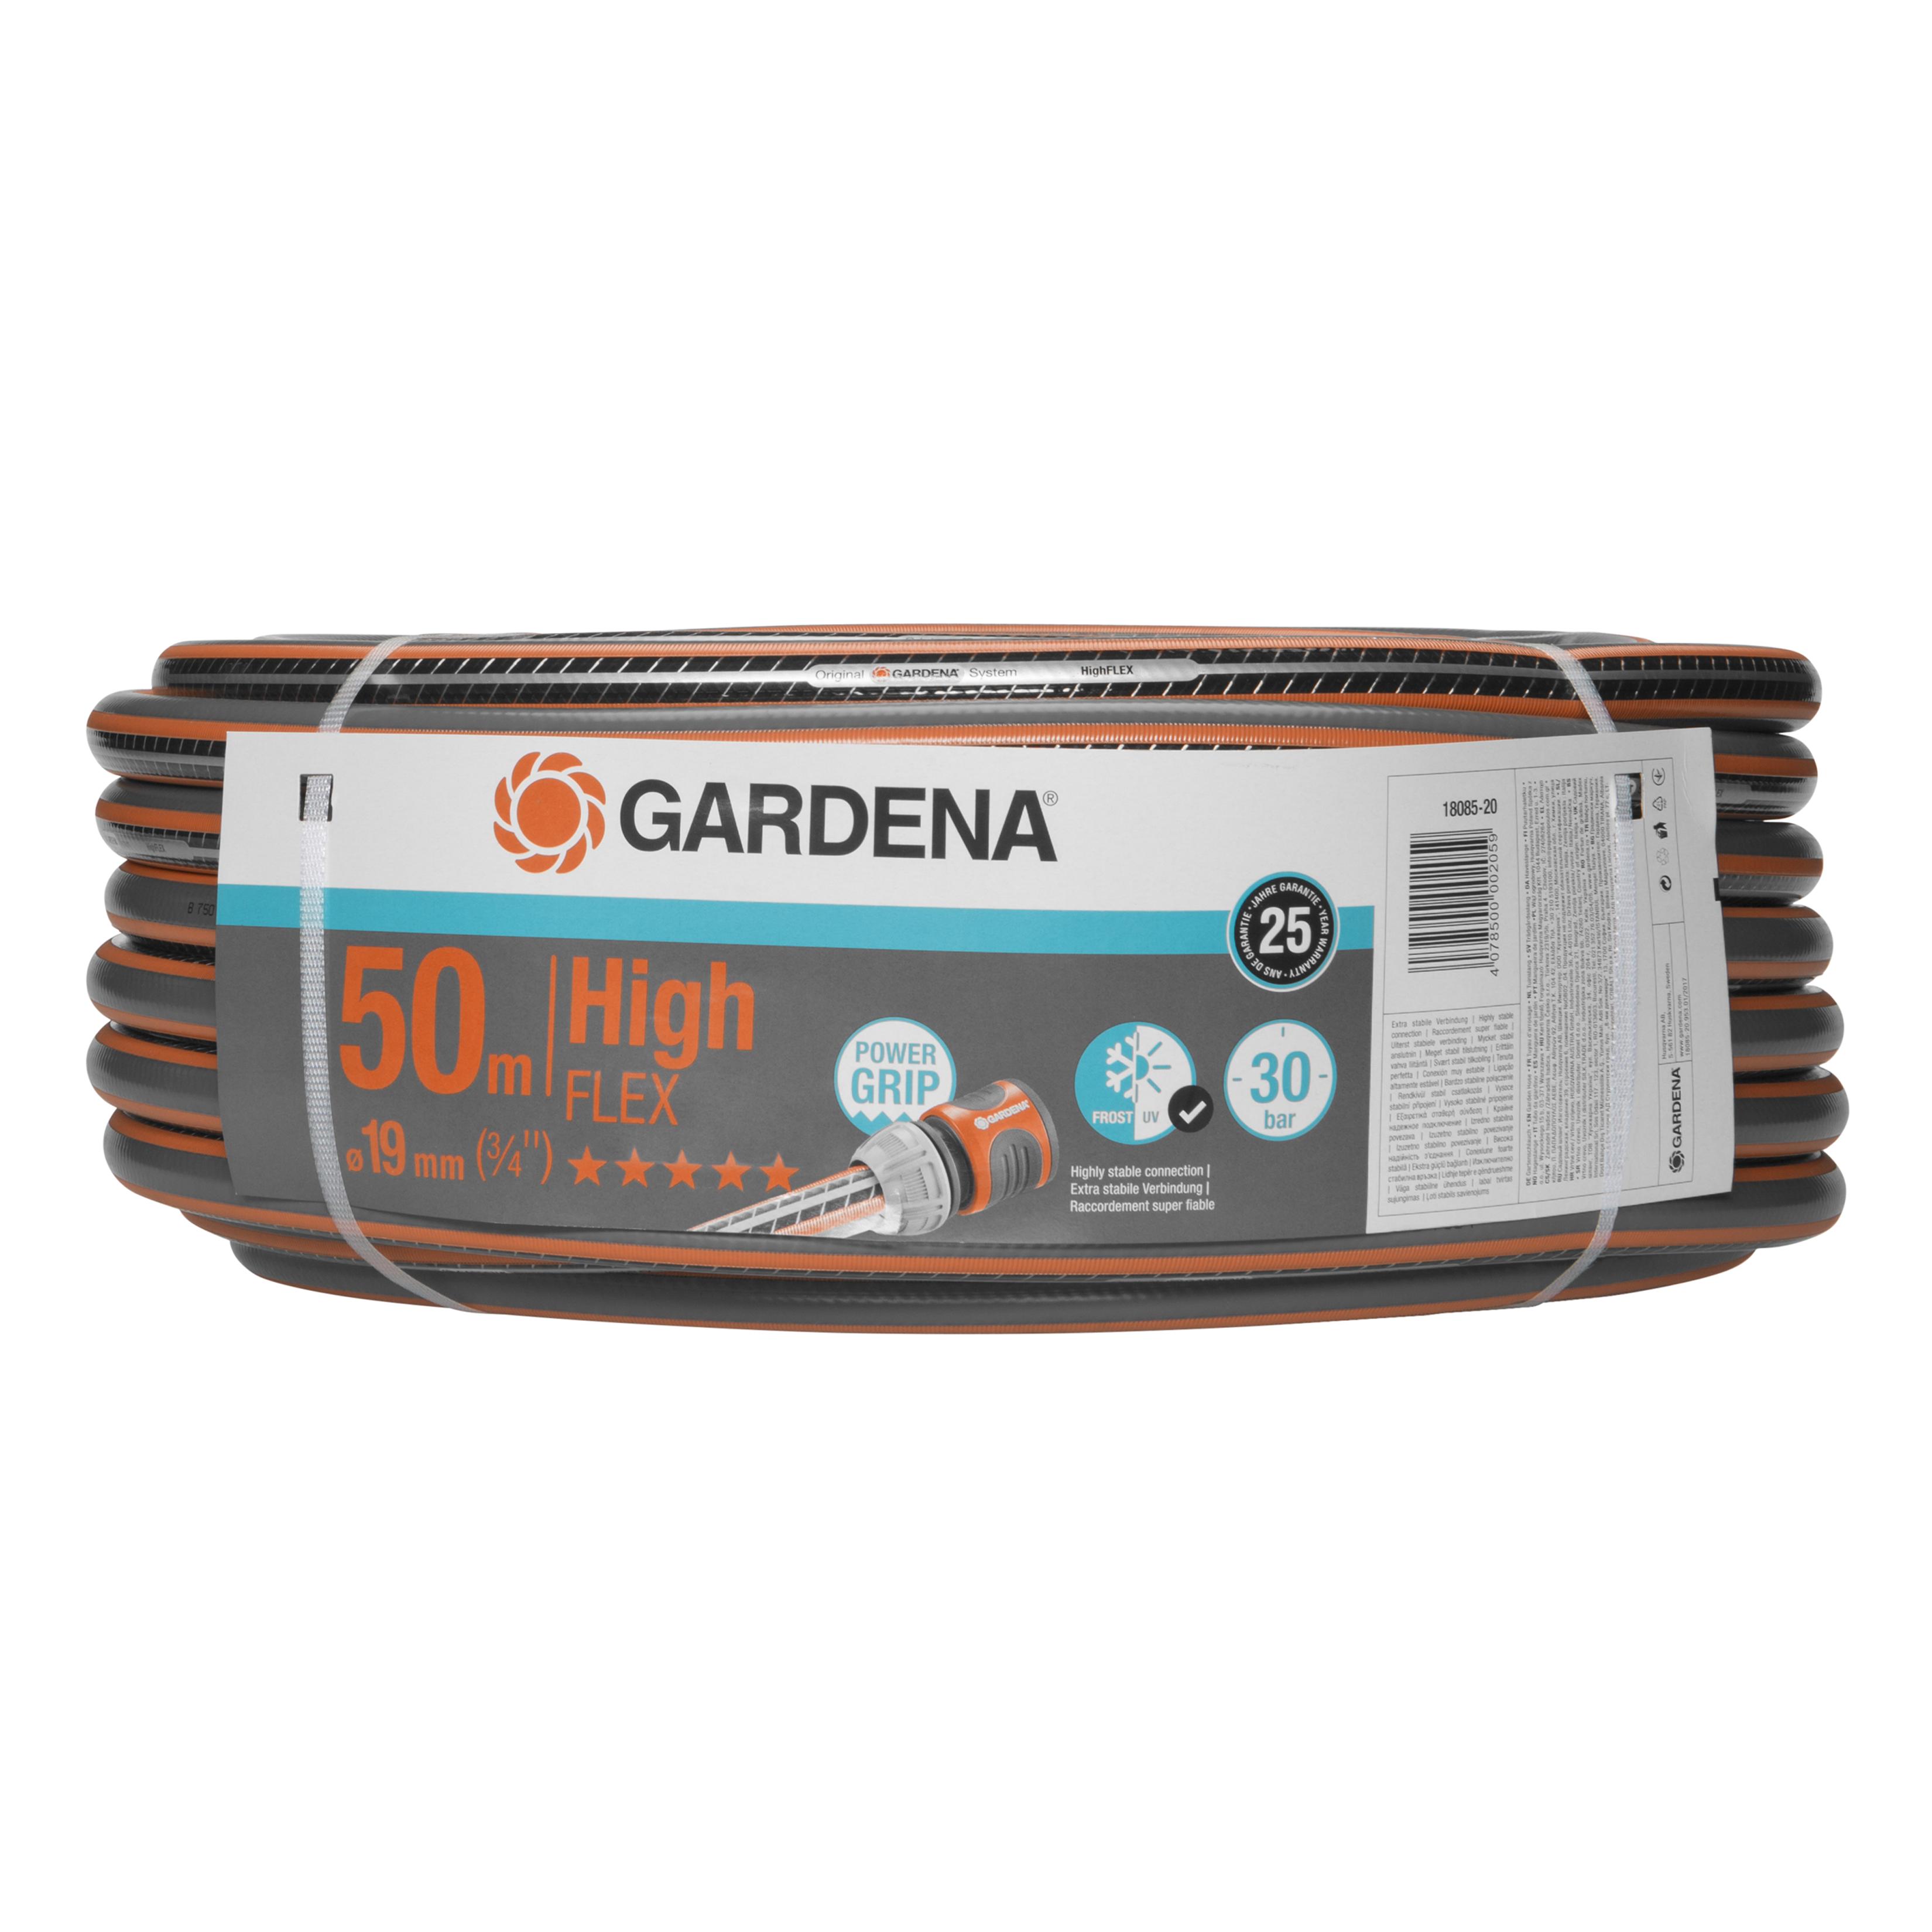 Gardena - Comfort HighFLEX Hose 19 mm 50m - Hage, altan og utendørs